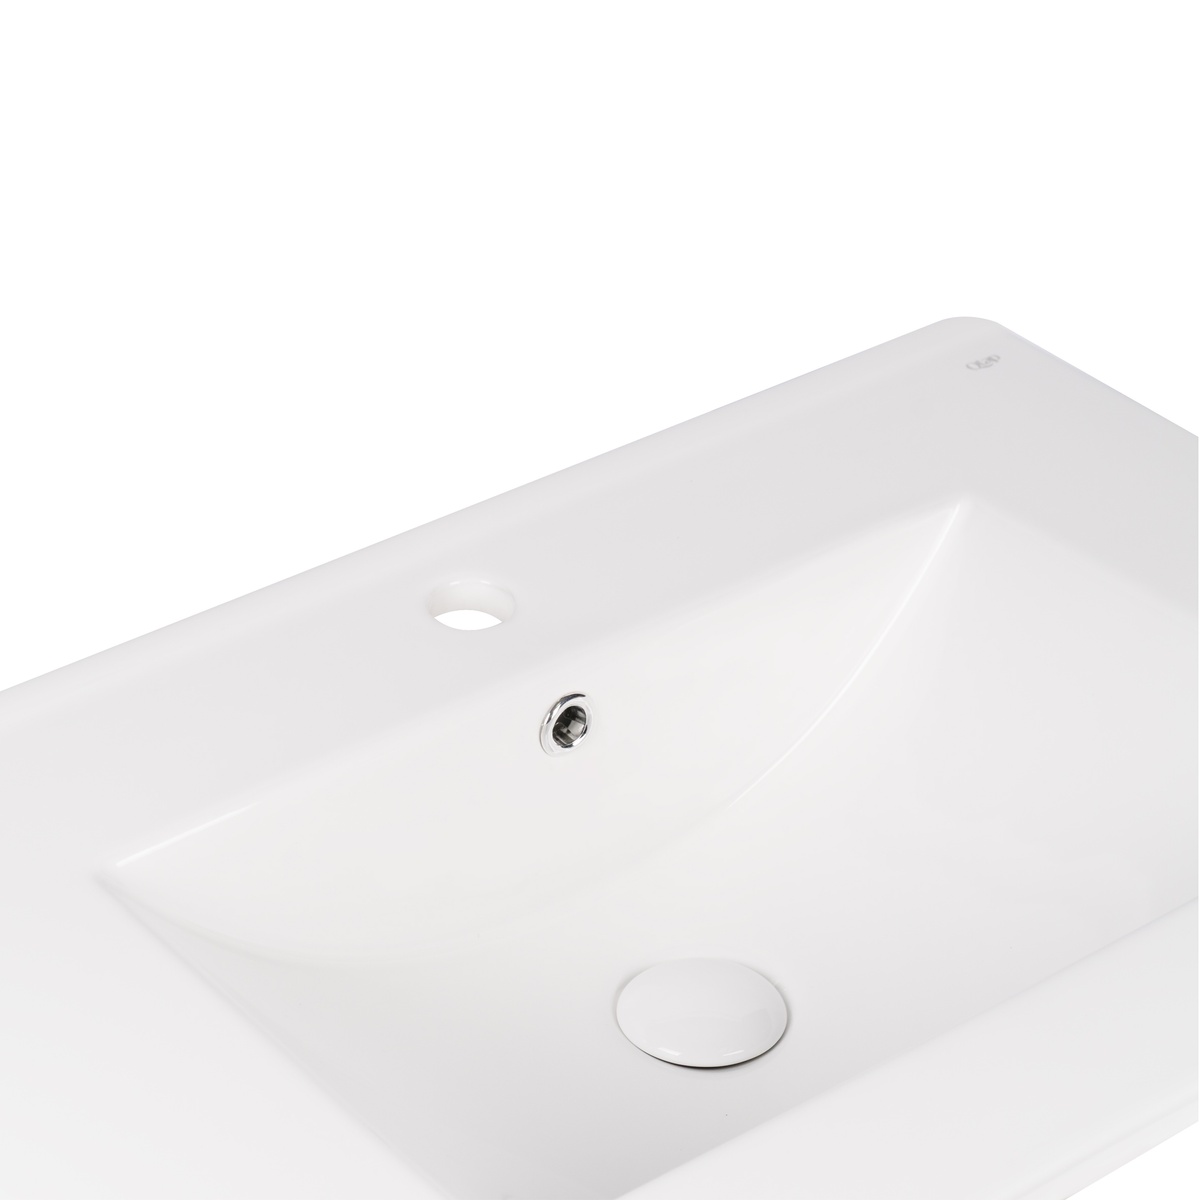 Раковина врезная для ванны на столешницу 715мм x 470мм Q-TAP Albatross белый прямоугольная QT0111750670W